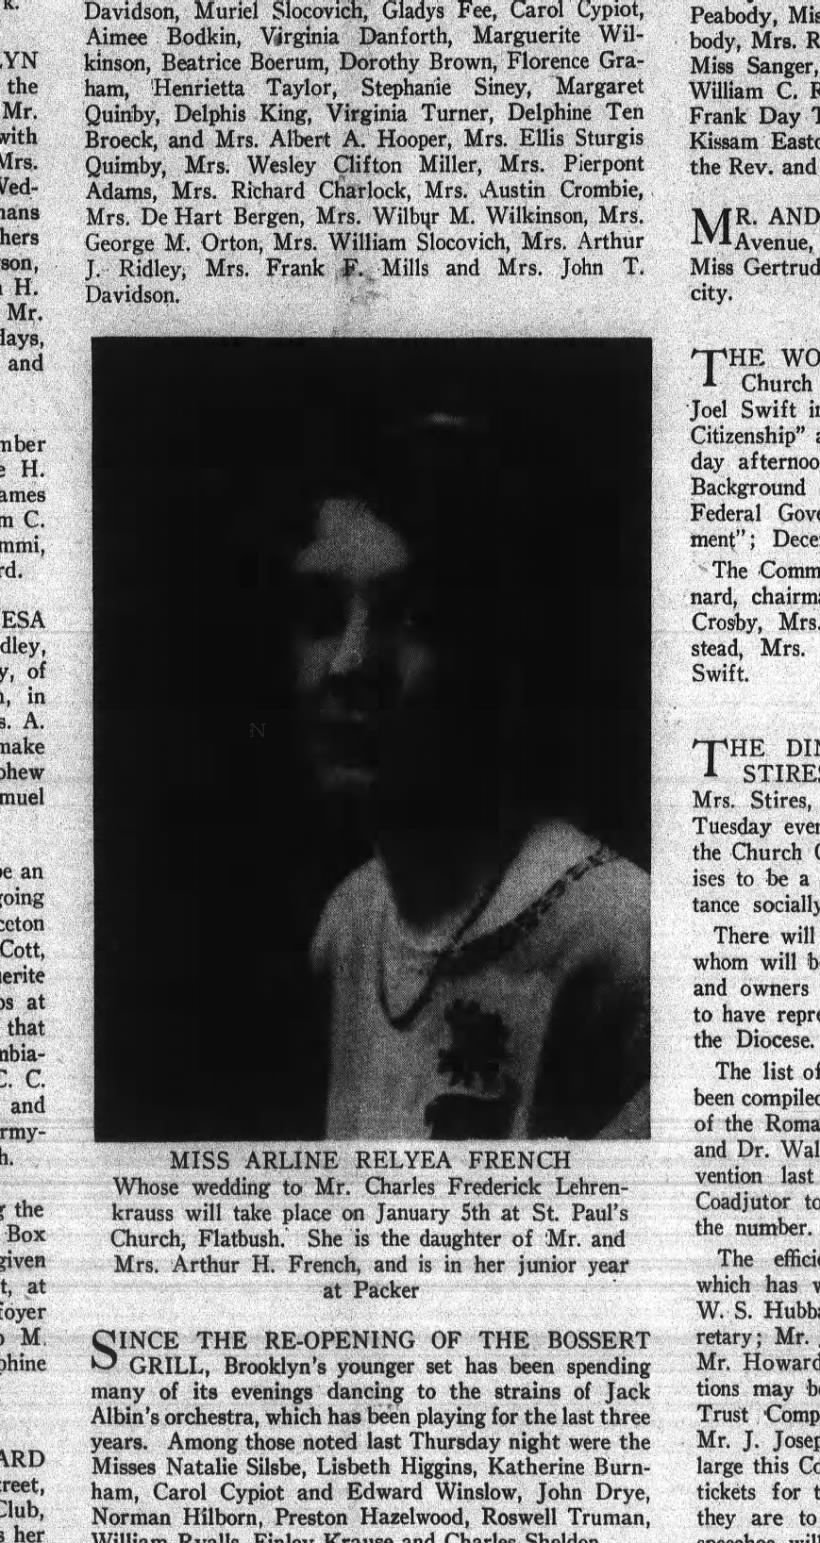 1925-10-31 Arline Relyea French L. (Bild)